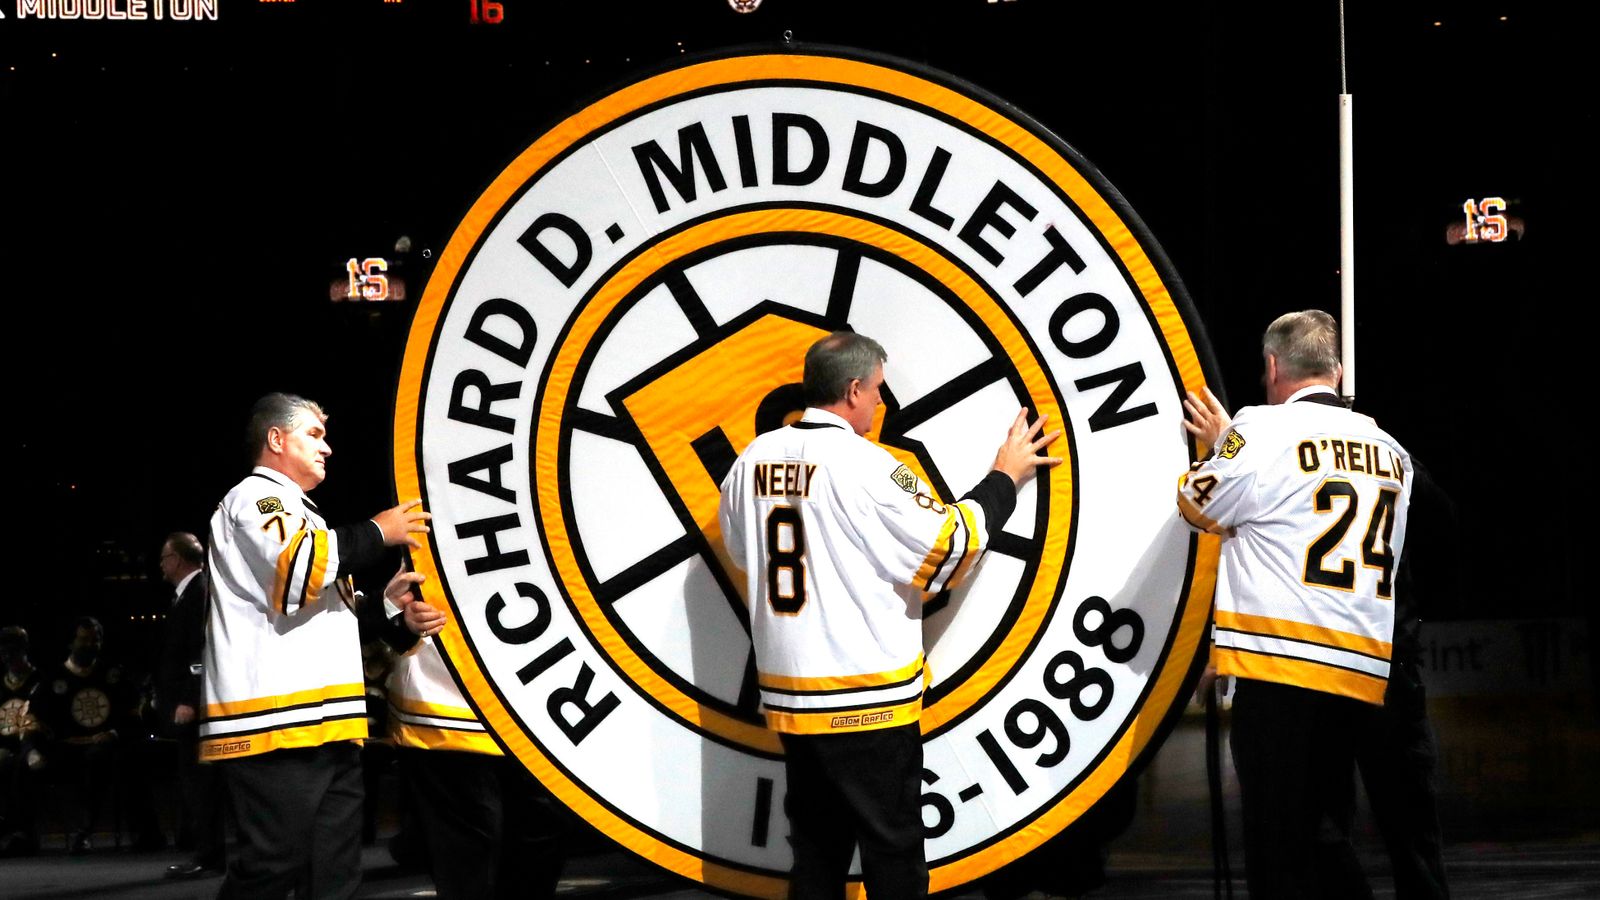 Boston Bruins Cam Neely #8 black jersey